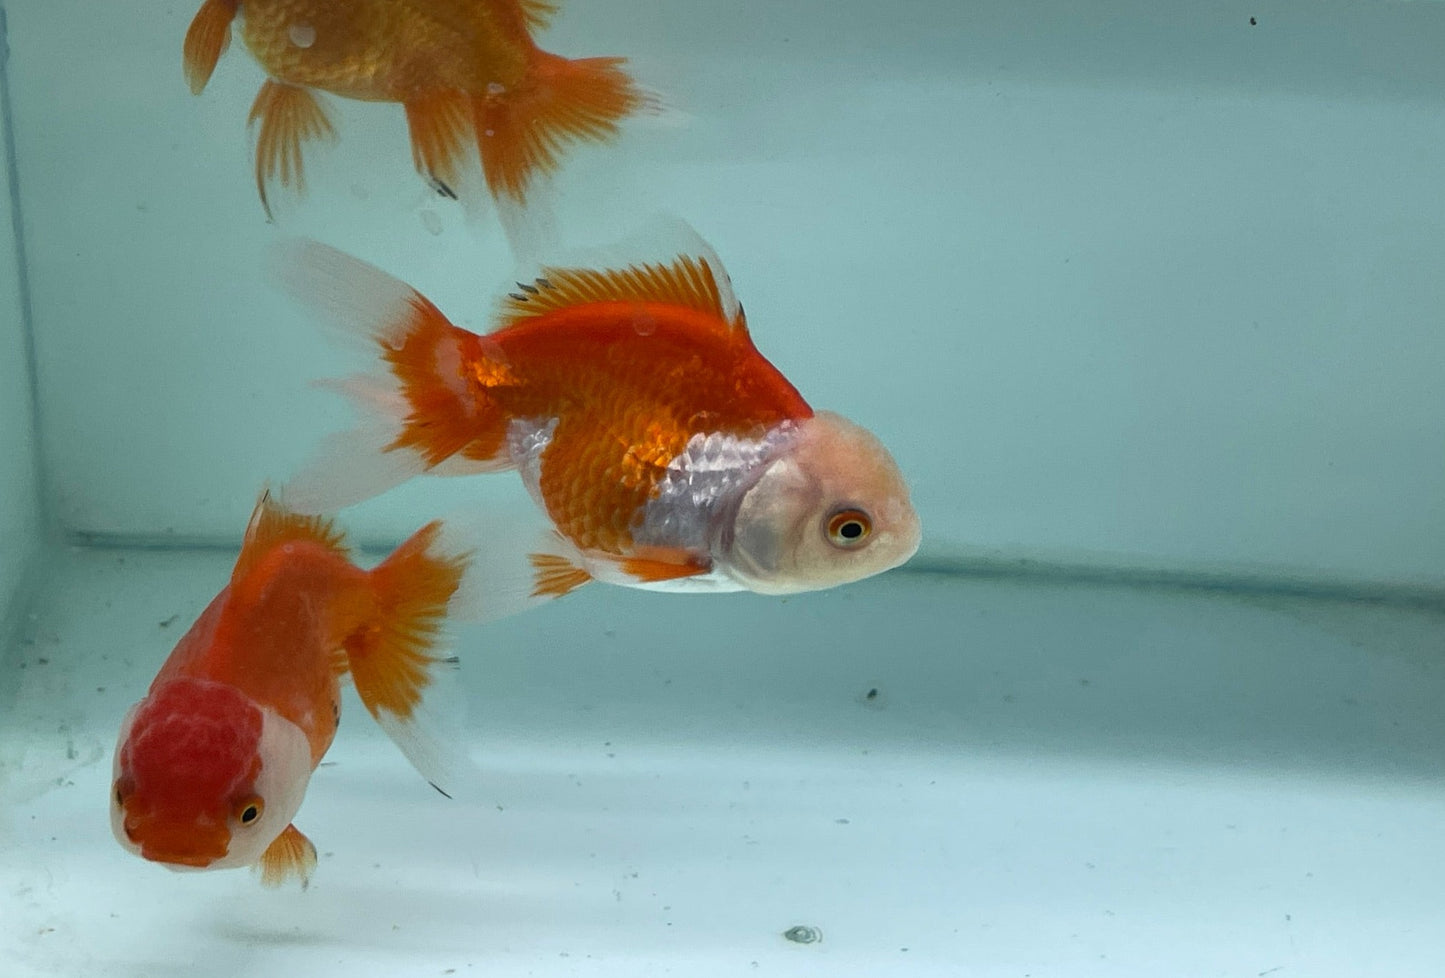 Oranda Fancy Goldfish 8-10cm (Picked at Random)